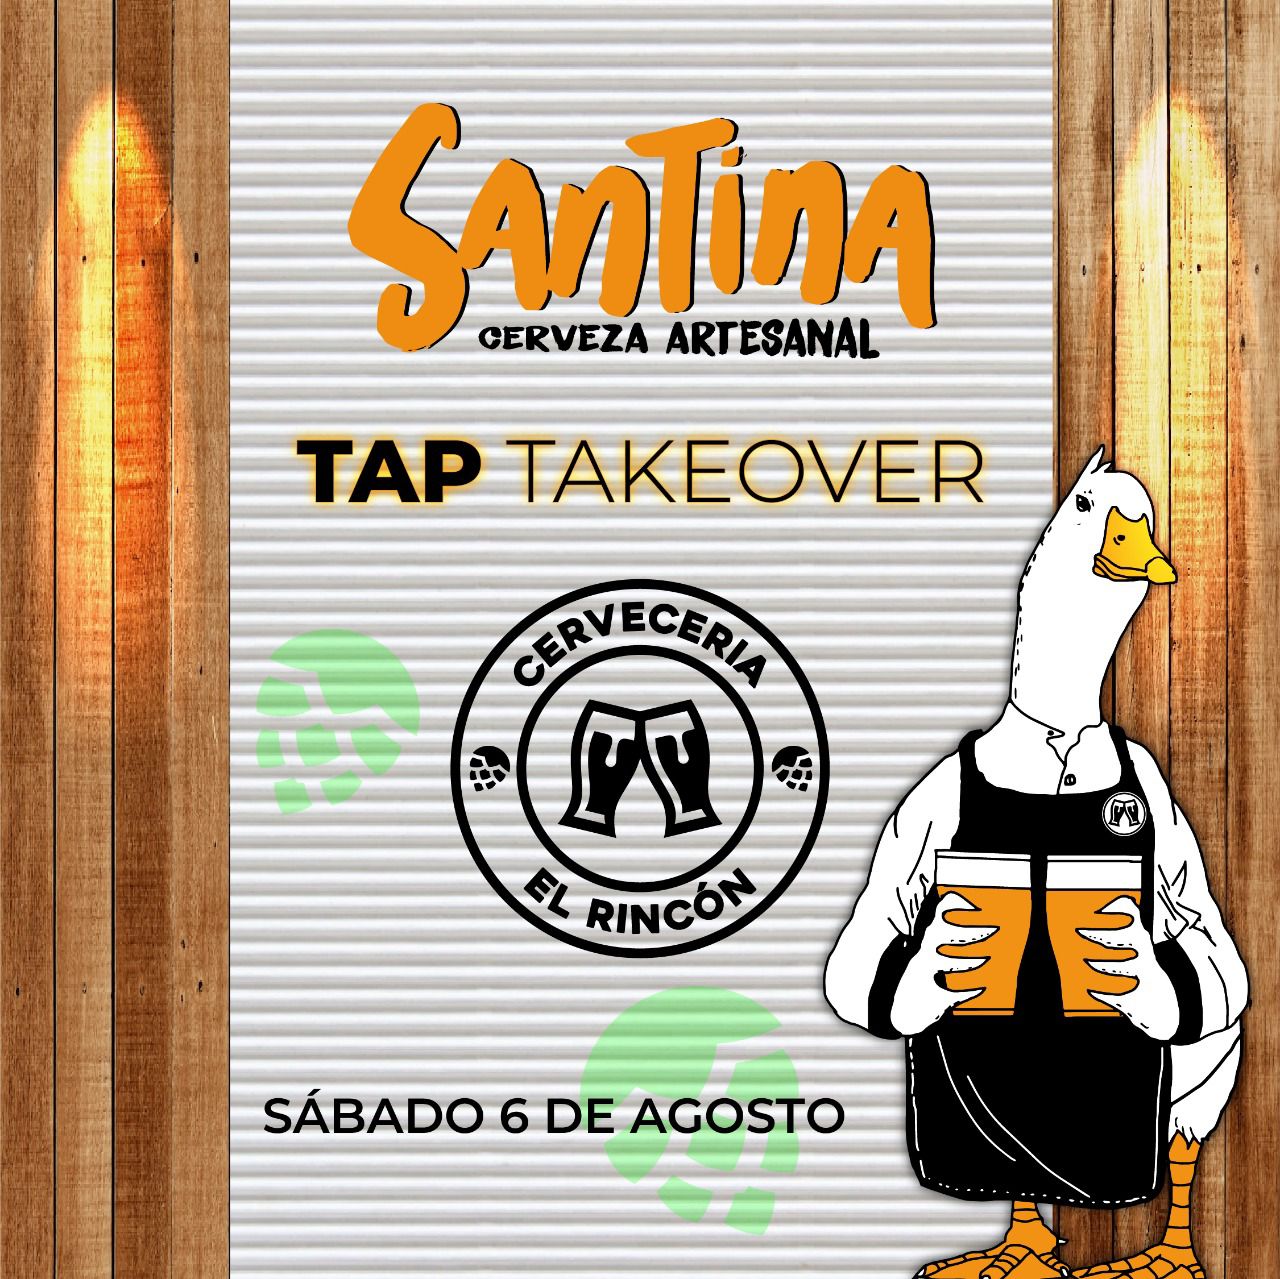 Santina Tap Take Over - Cervecería El Rincón